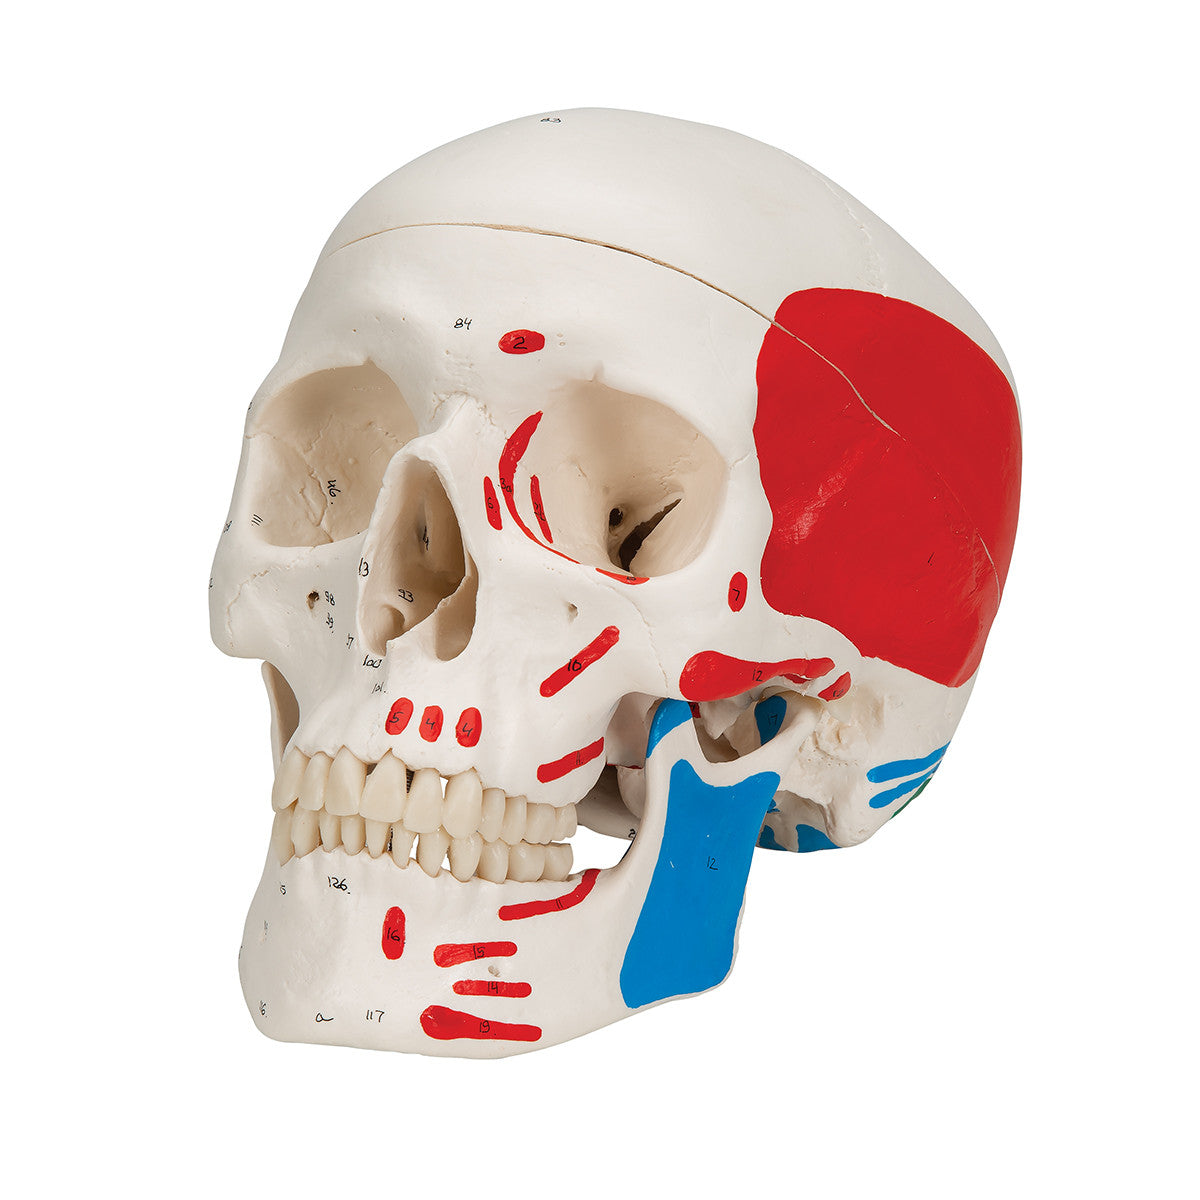 Classic Human Skull Model, painted, 3-part | 3B Scientific A23